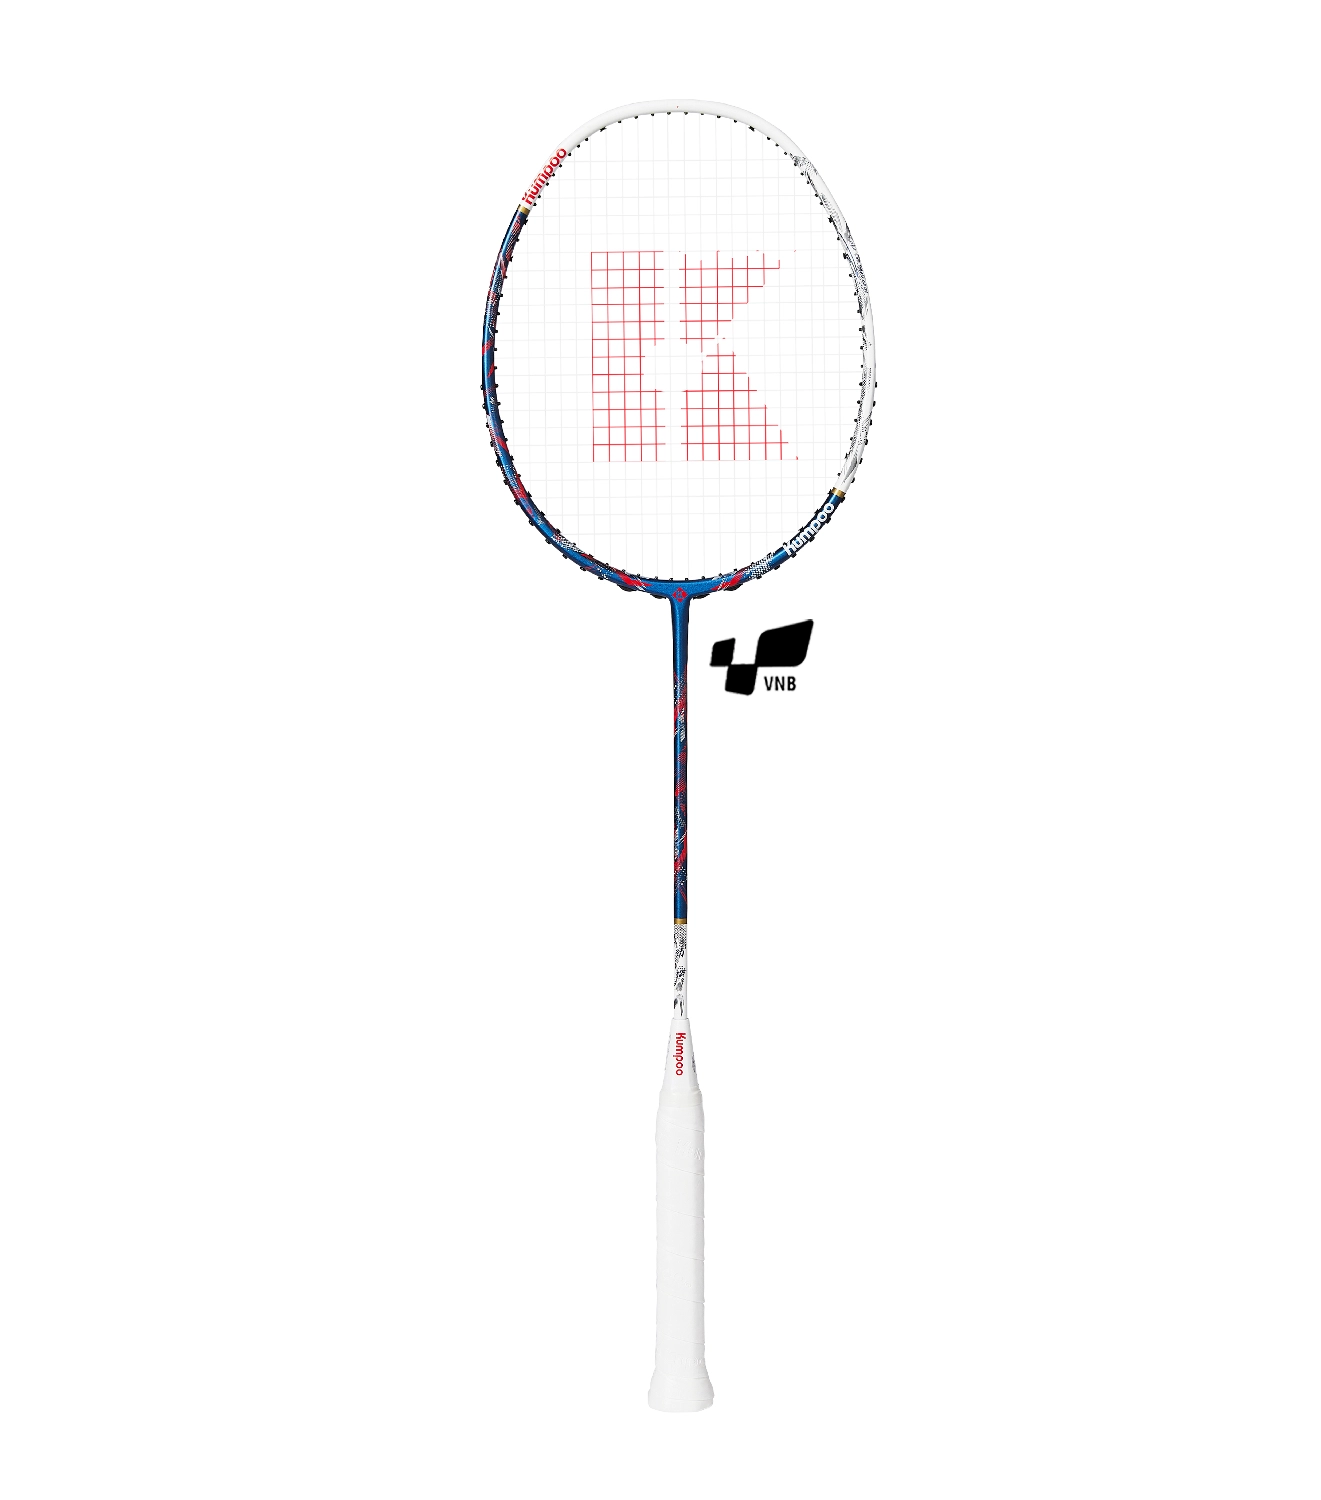 Combo mua vợt cầu lông Kumpoo Pines Tặng Vợt Kumpoo Lanting Túi Kumpoo K26S Xan	